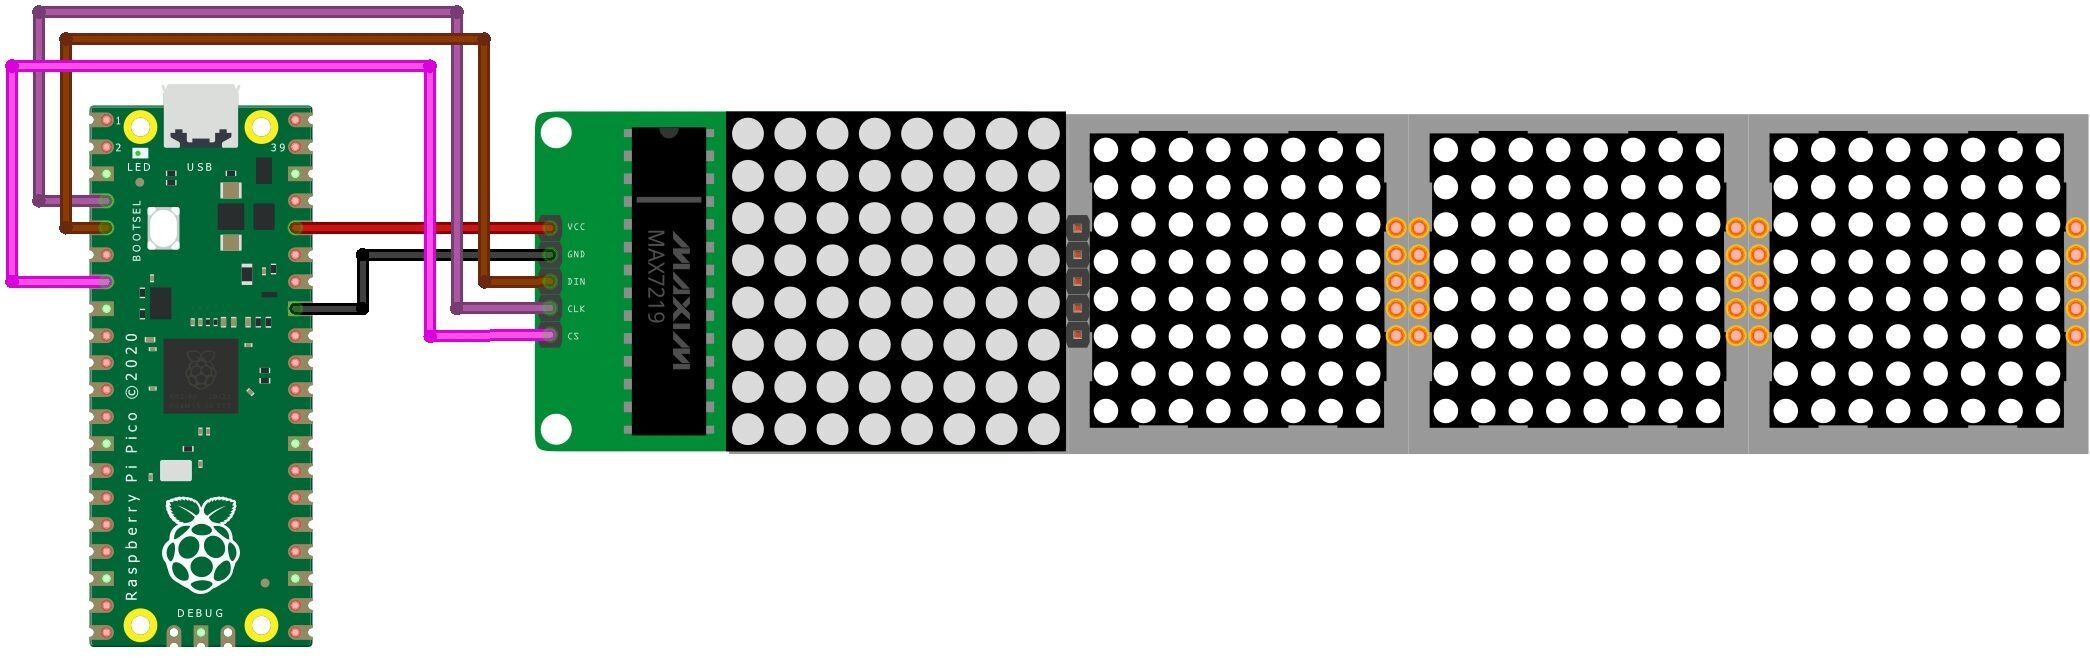 8x8 LED Matrix MAX7219 with Raspberry Pi Pico fritzing circuit